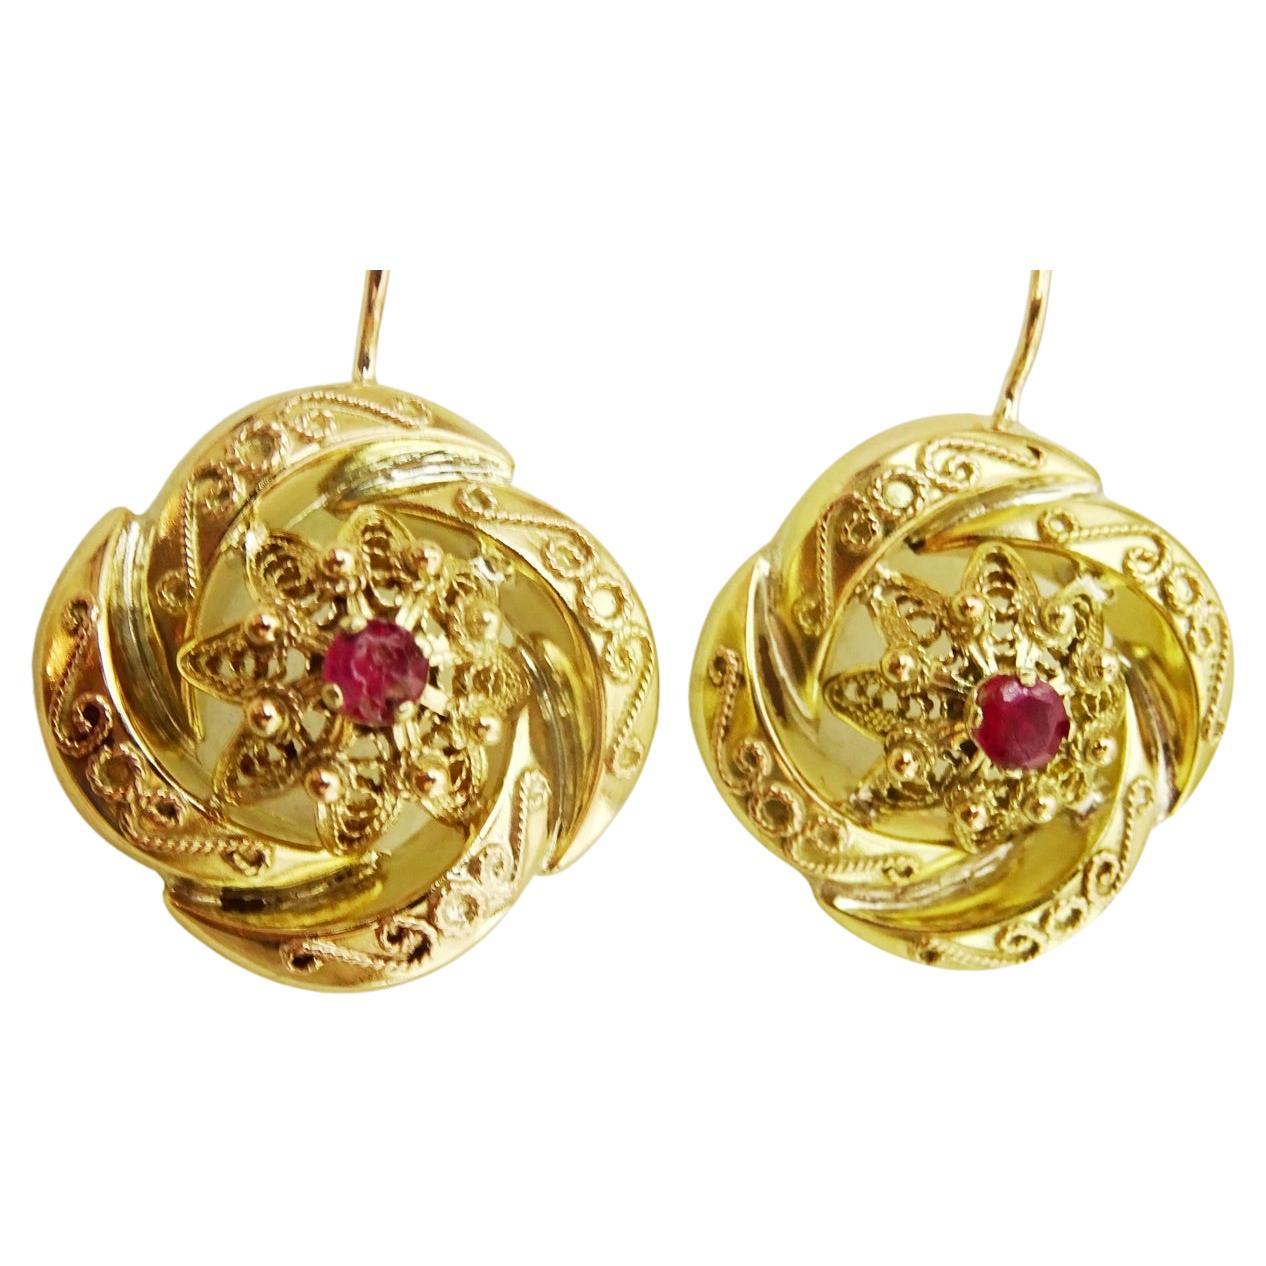 Vintage European 14 karat Gold and Ruby Handmade Earrings For Sale